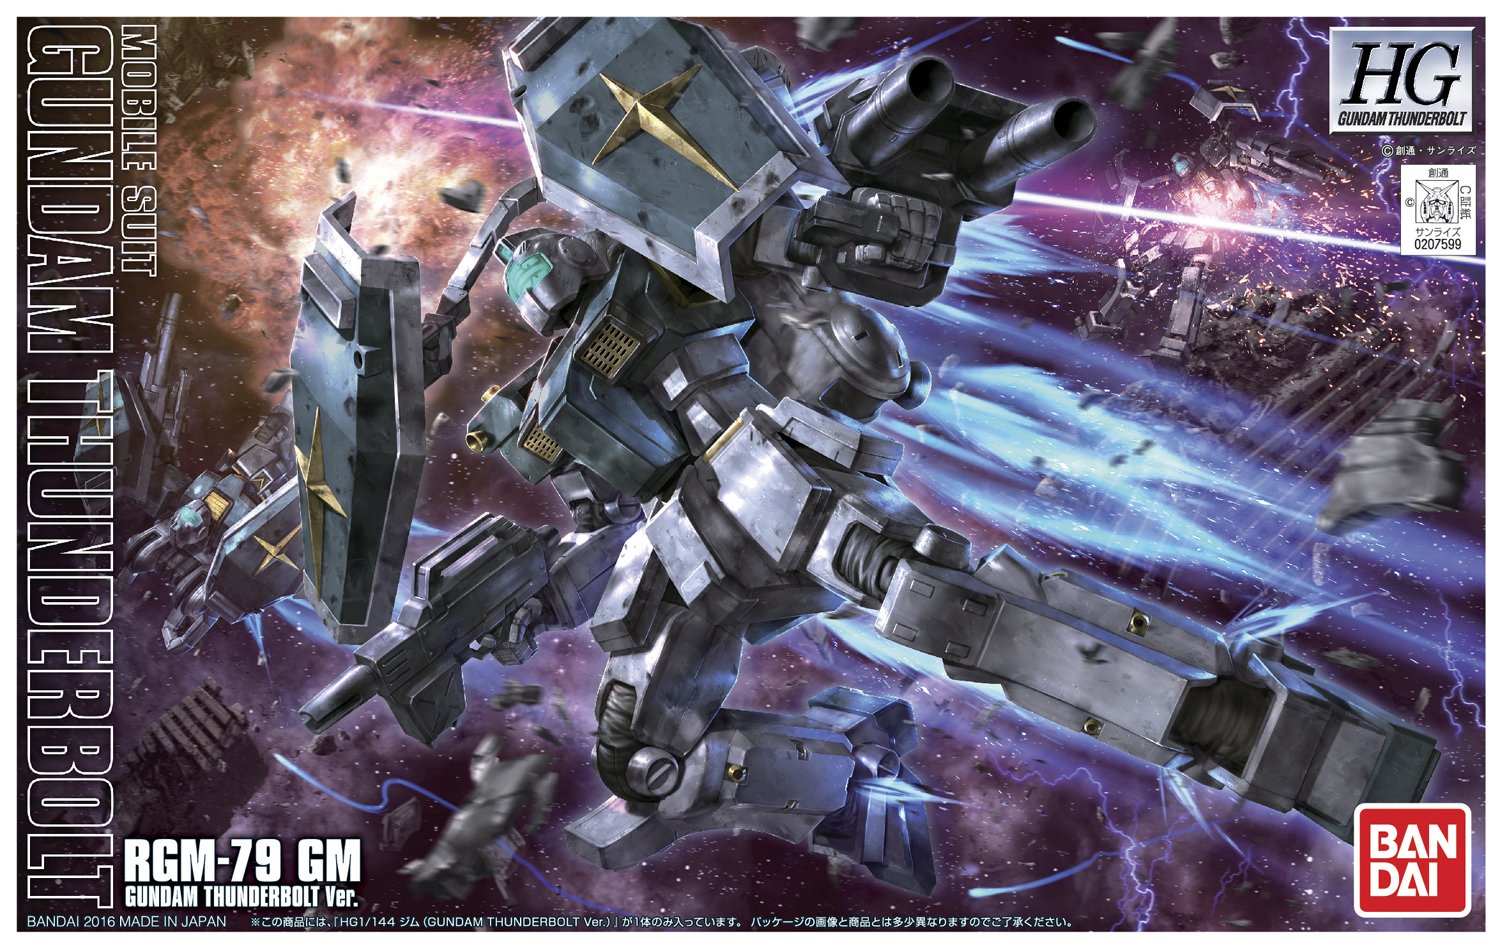 HG 1/144 RGM-79 GM Gundam Thunderbolt Ver. Just Added Box Art and 